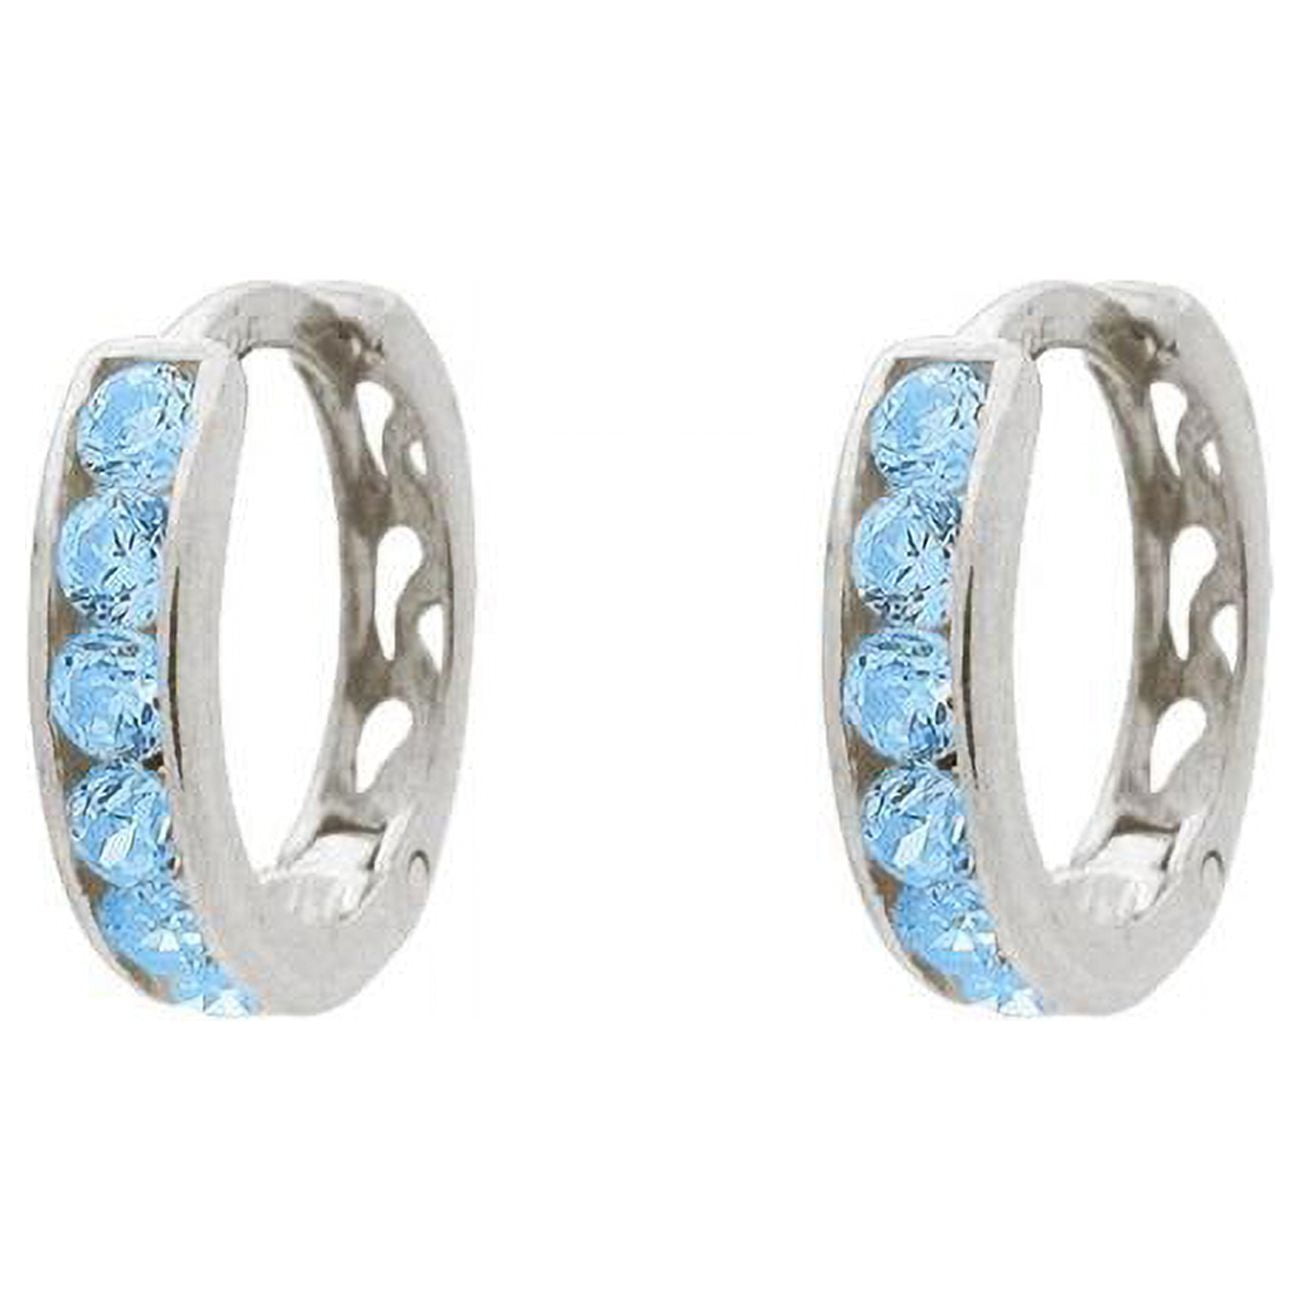 415135a Sparkling London Blue Sterling Silver Huggie Earrings For Girls